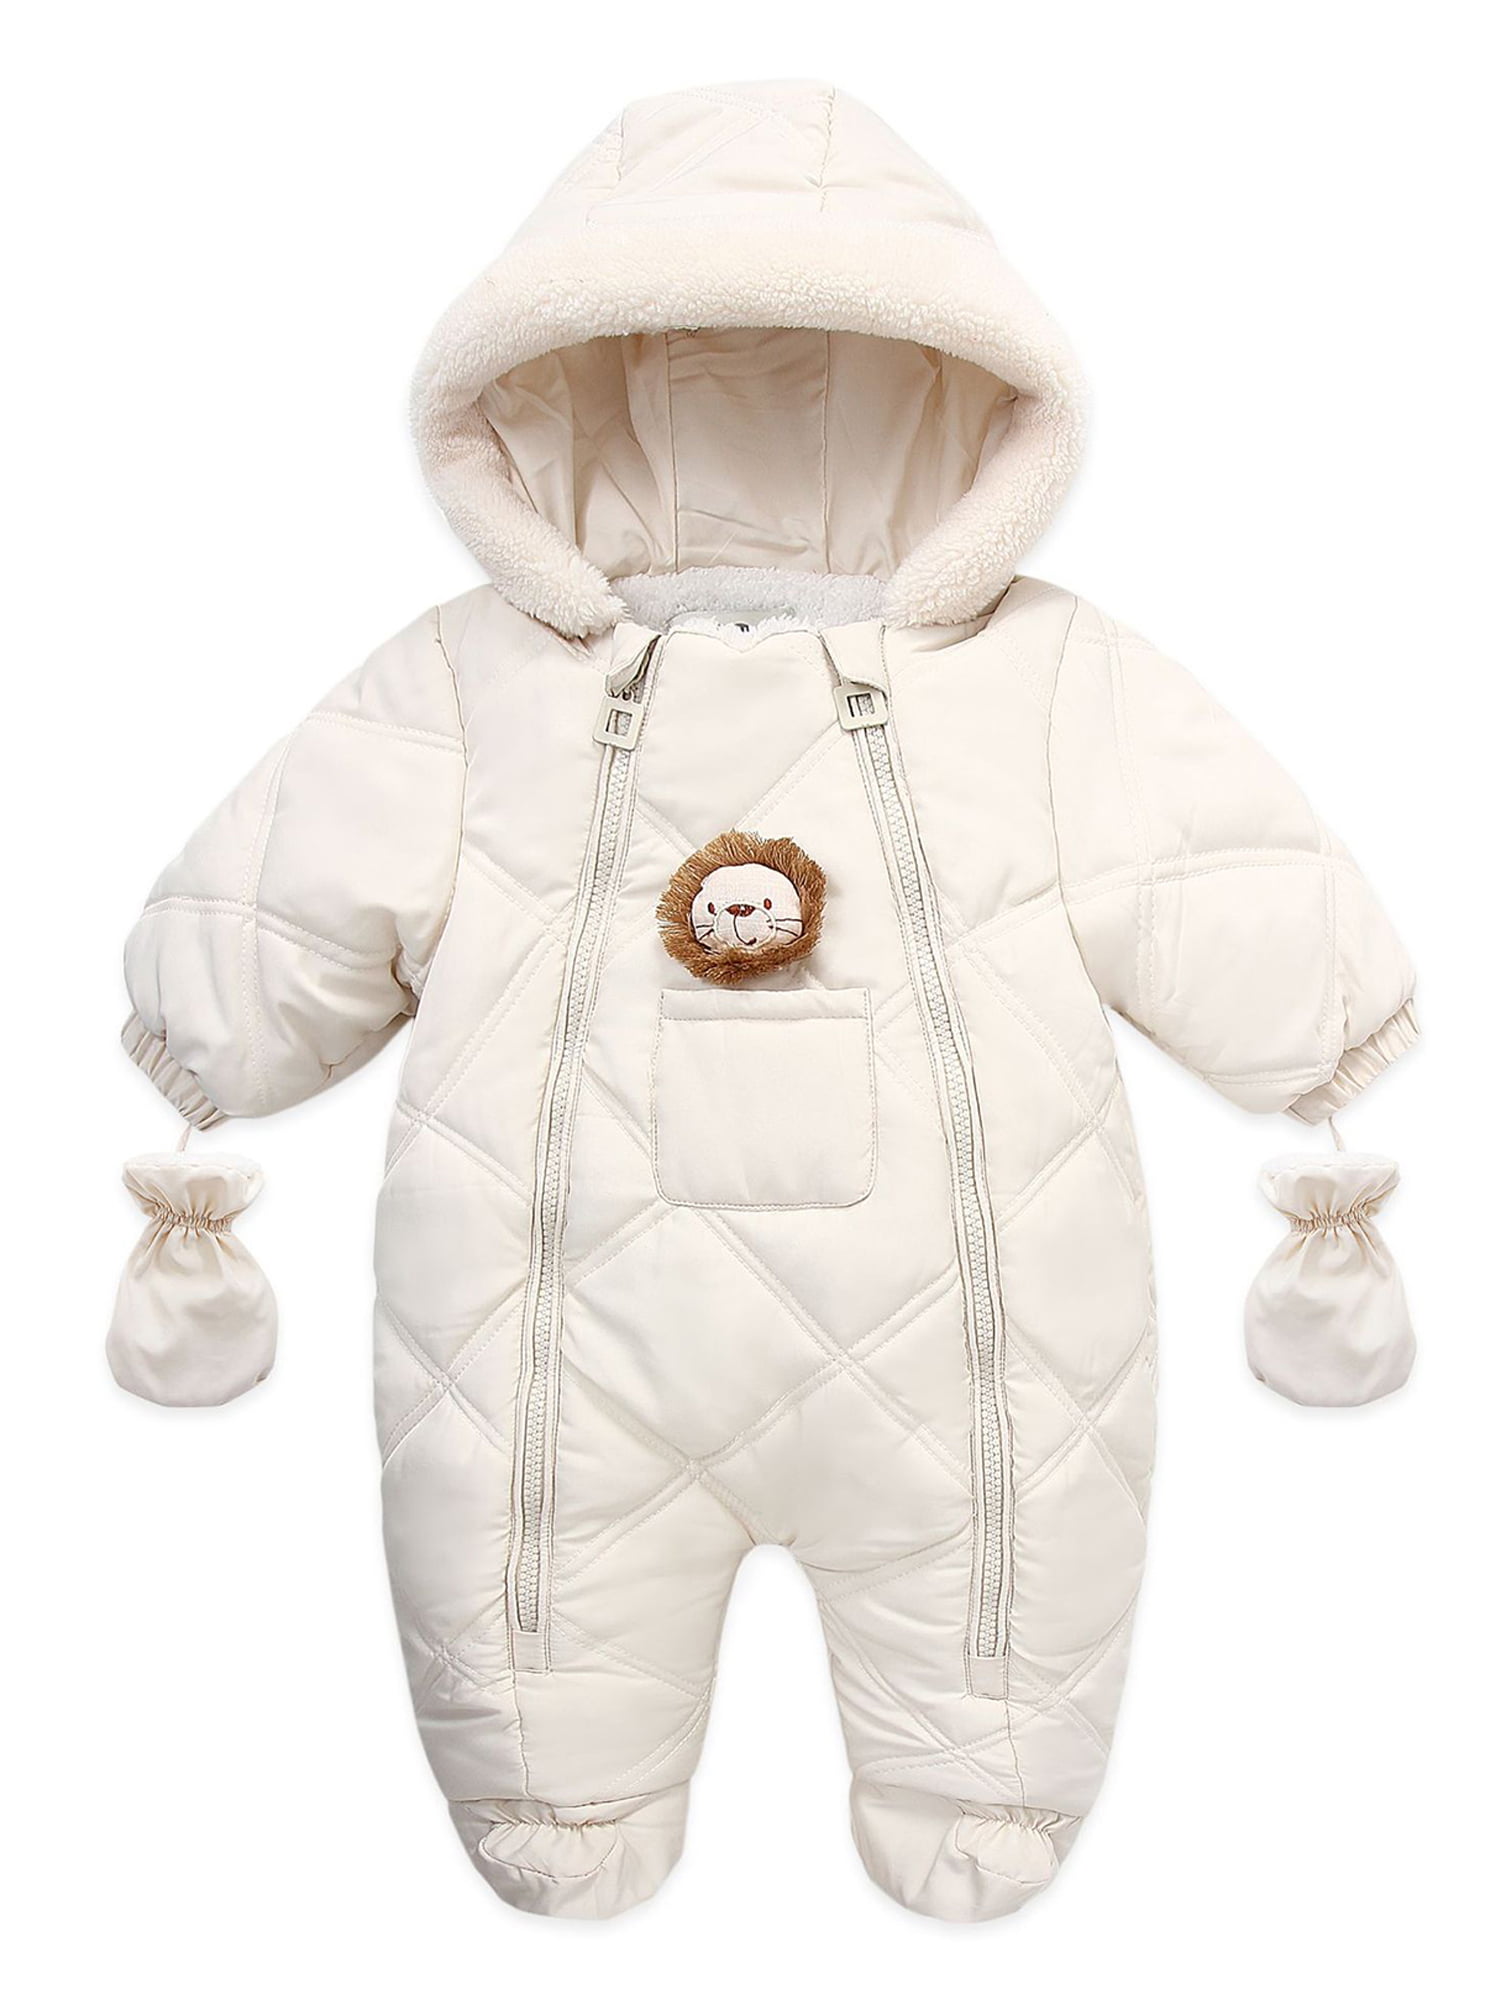 Newborn Infant Baby Boy Girl Cartoon Lion Pocket Romper Jumpsuit Playsuit Outfit 